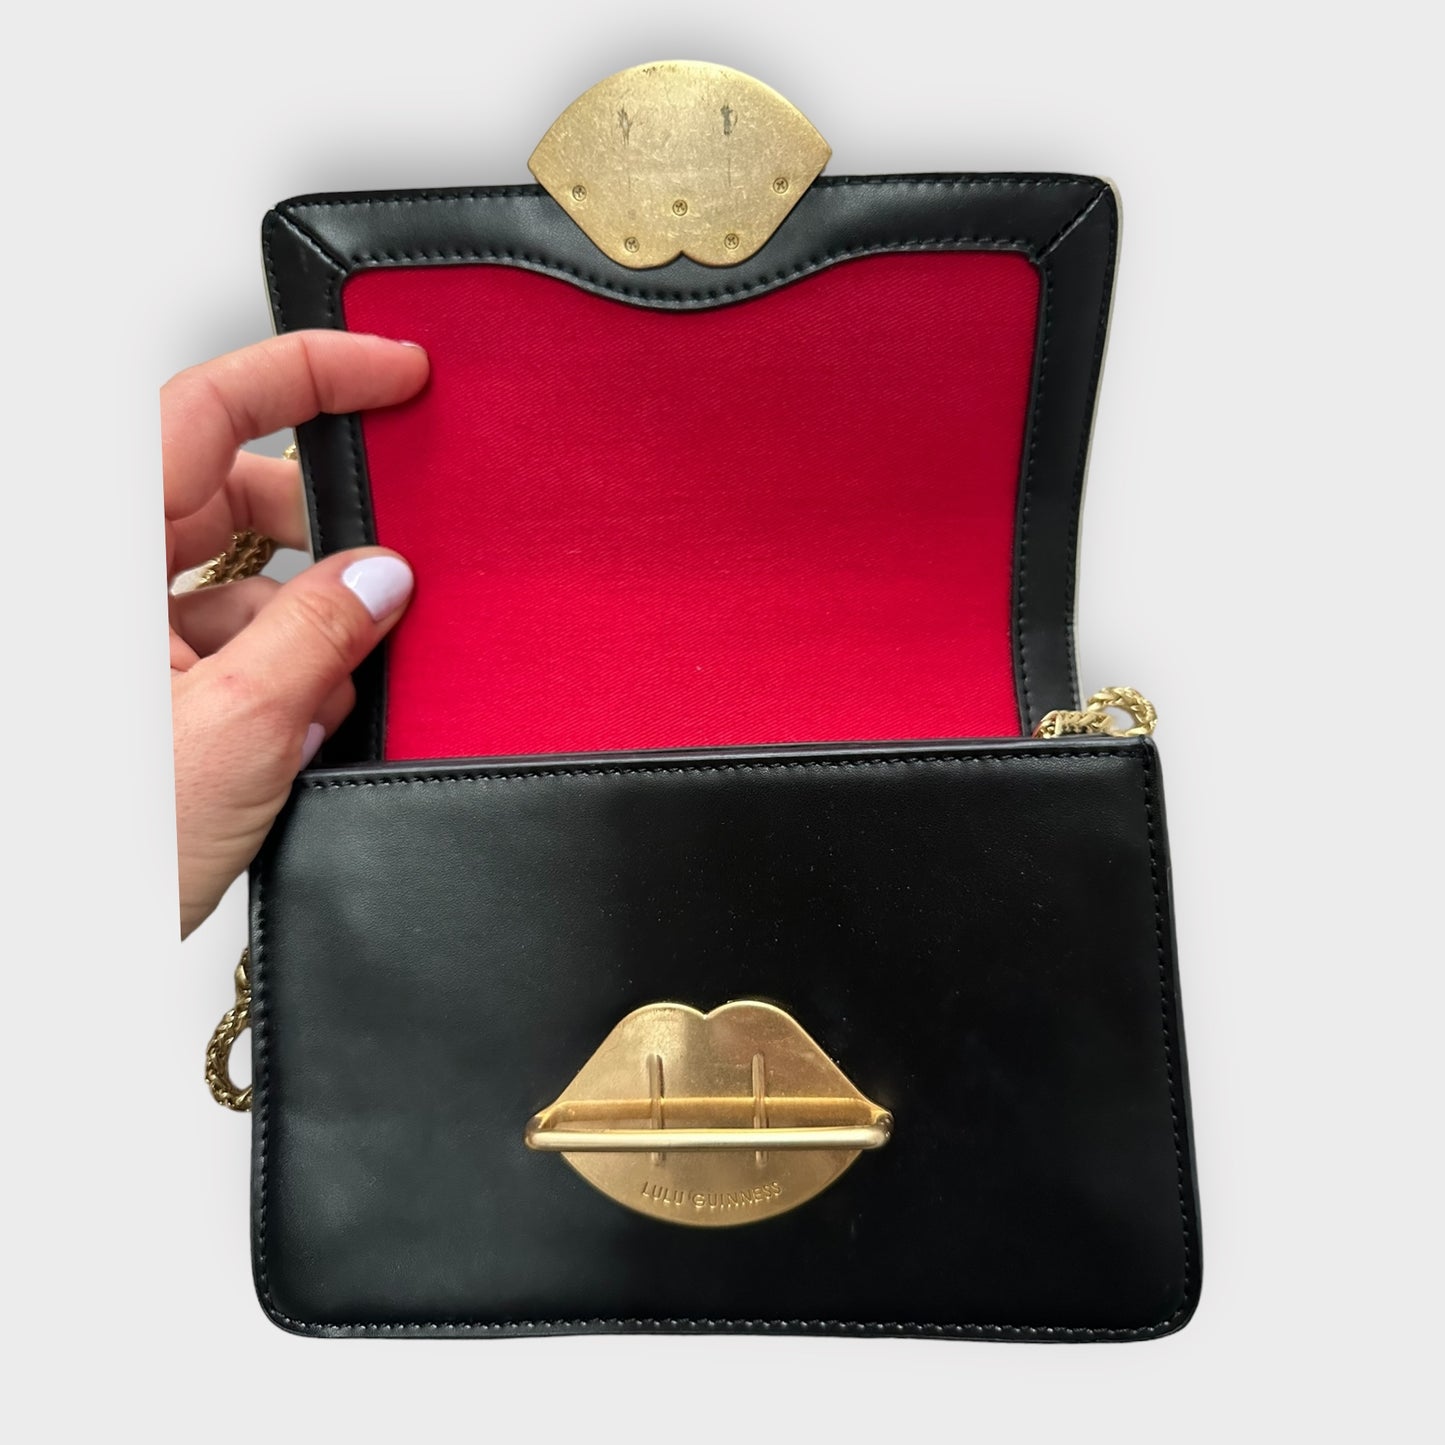 LULU Guinness black white leather gold chain small handbag vgc